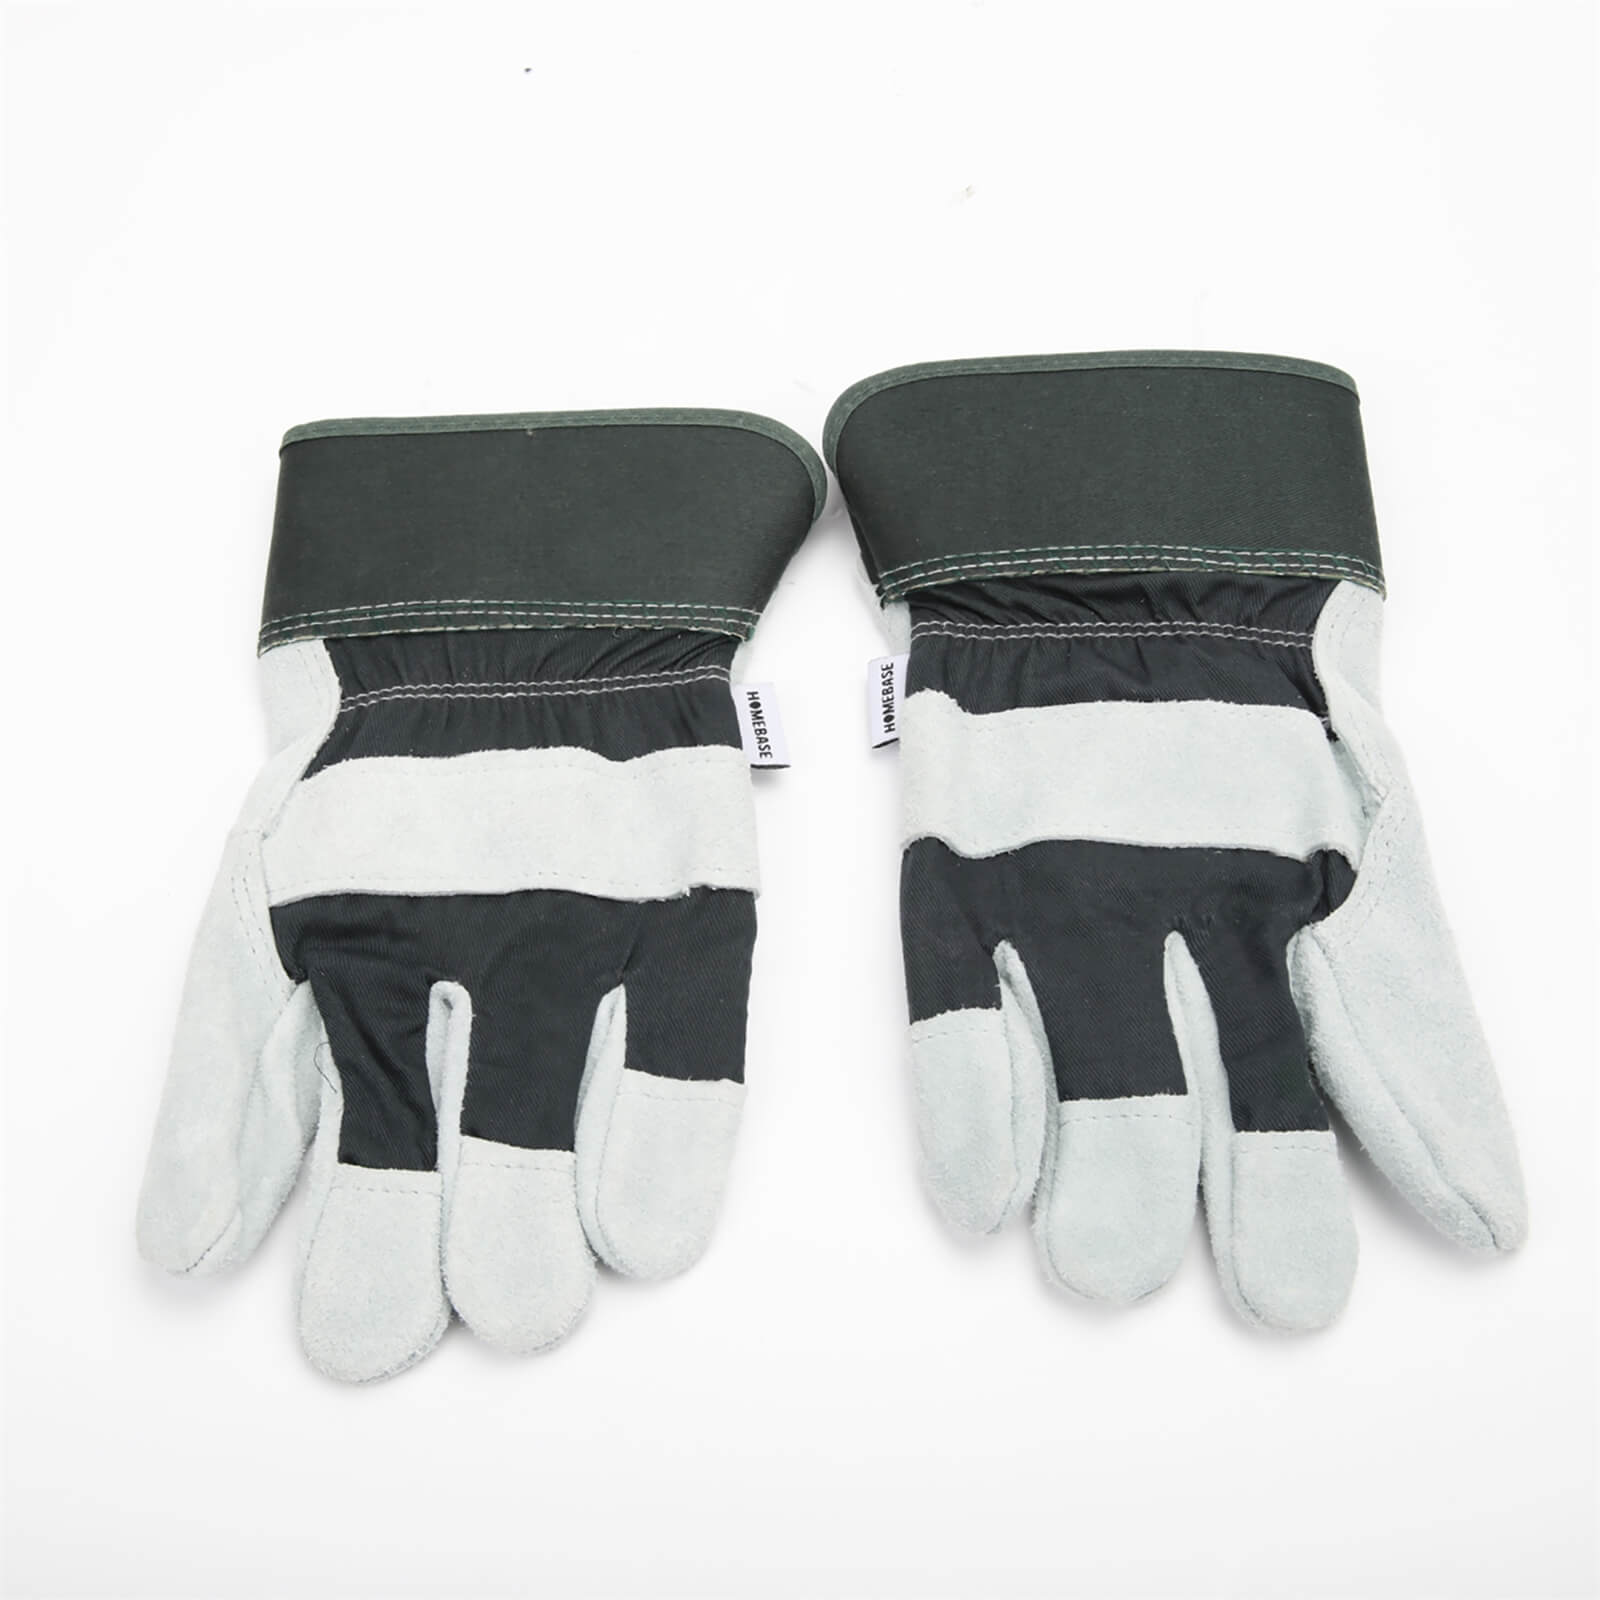 Homebase Classic Rigger Glove - Small